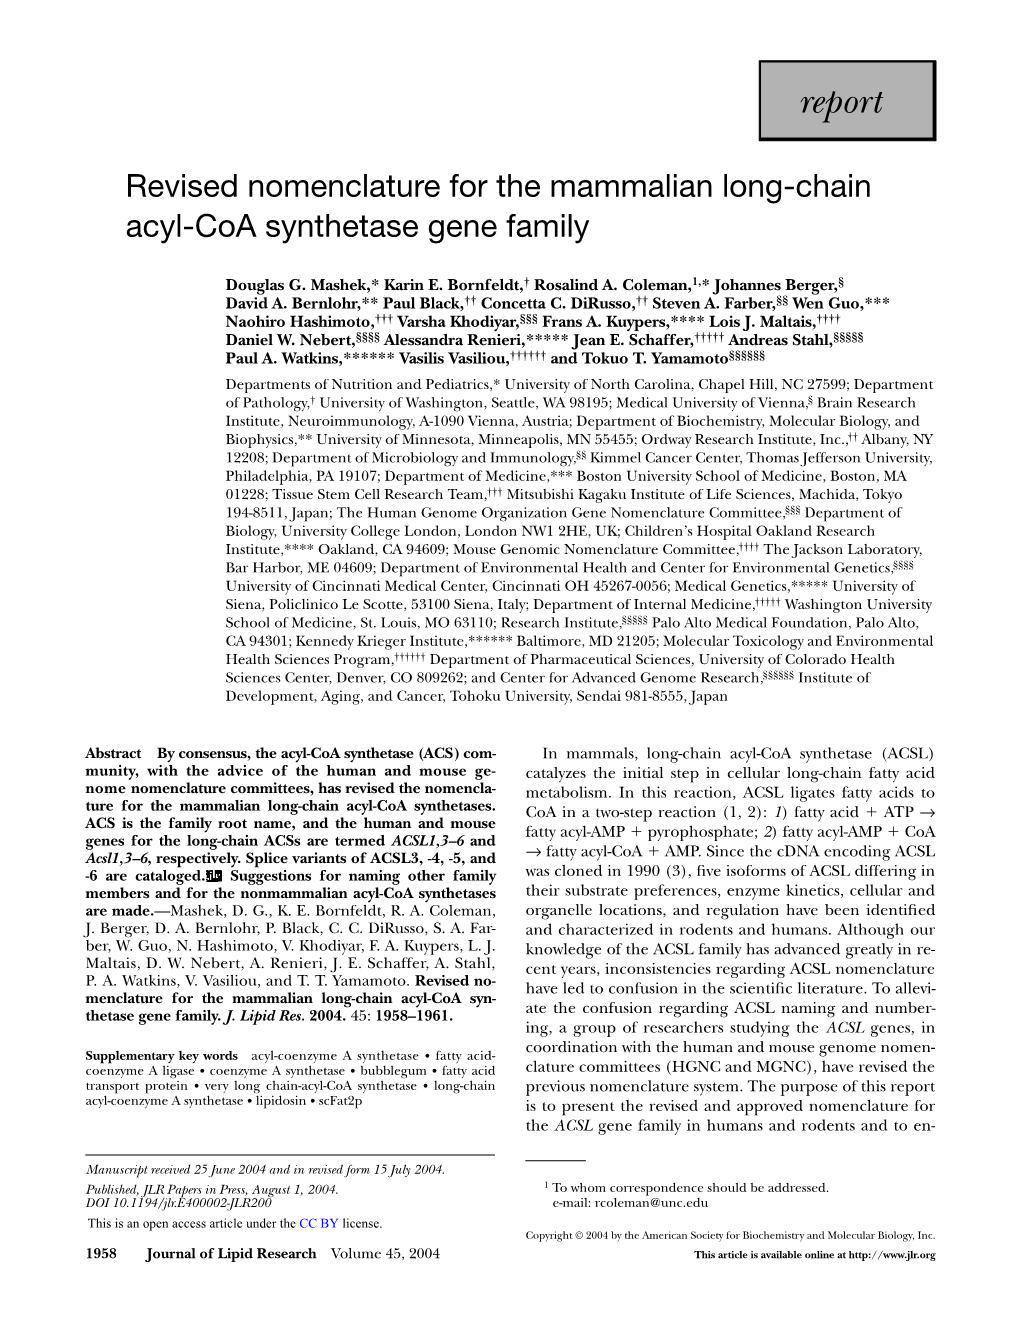 Revised Nomenclature for the Mammalian Long-Chain Acyl-Coa Synthetase Gene Family